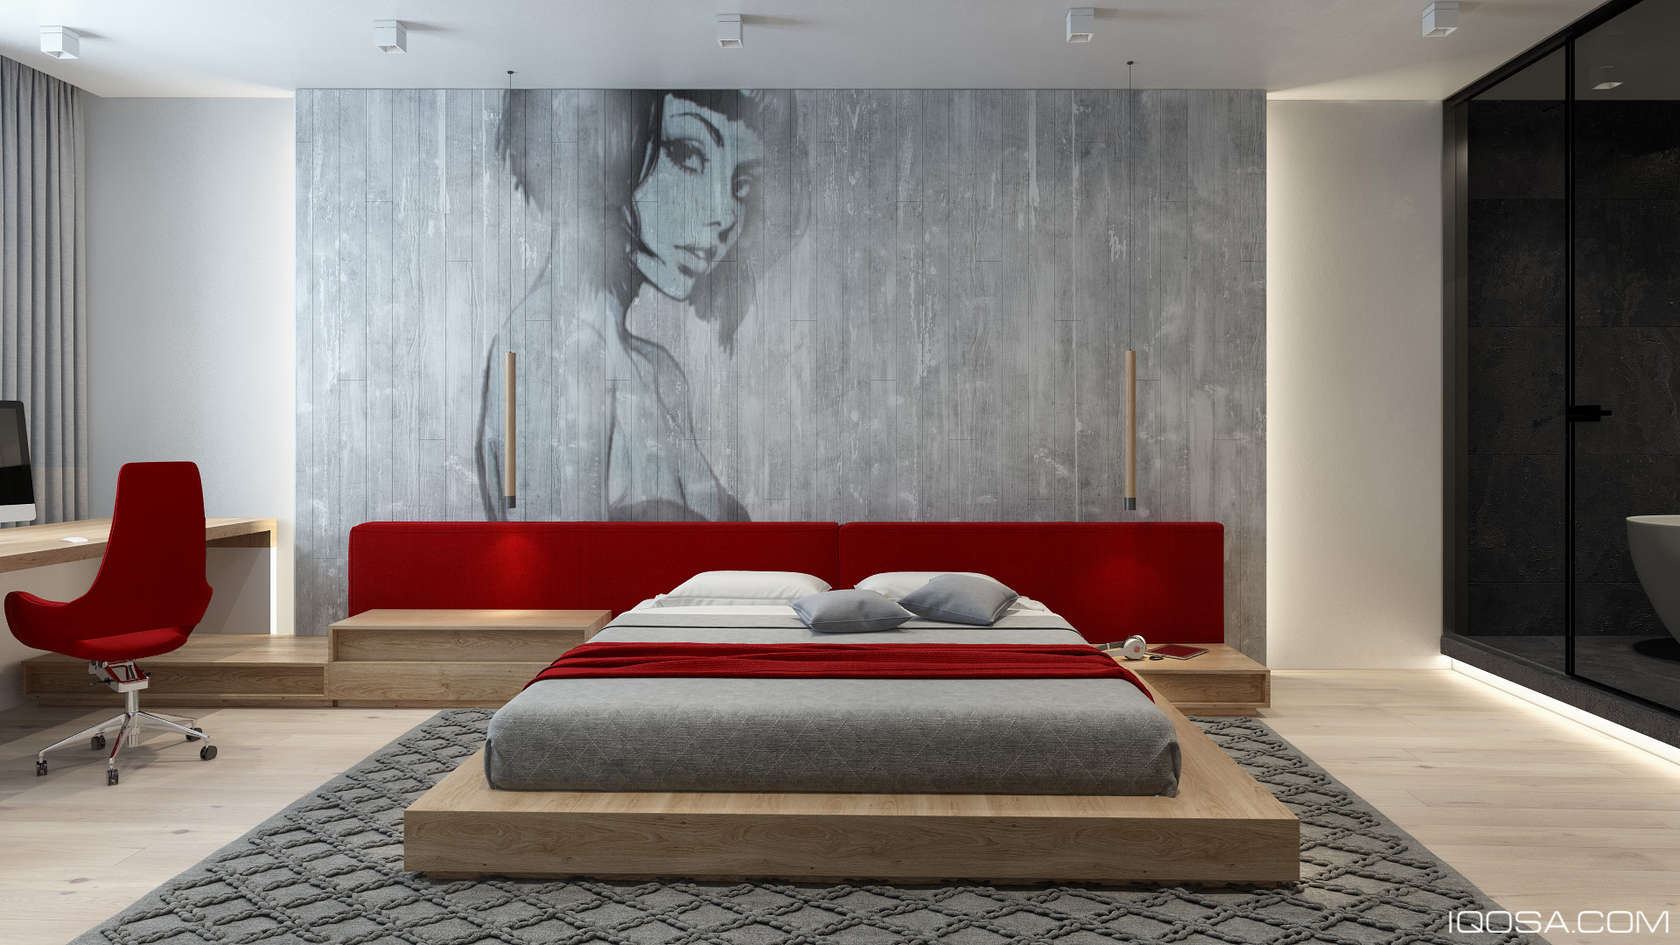 fantastic bedroom decorating ideas "width =" 1680 "height =" 945 "srcset =" https://mileray.com/wp-content/uploads/2020/05/1588508600_137_Inspiration-Of-Bedroom-Decorating-Ideas-Which-Applying-a-Trendy-Design.jpg 1680w, https://mileray.com/wp -content / uploads / 2016/11 / Iqosa-300x169.jpg 300w, https://mileray.com/wp-content/uploads/2016/11/Iqosa-768x432.jpg 768w, https://mileray.com/wp -content / uploads / 2016/11 / Iqosa-1024x576.jpg 1024w, https://mileray.com/wp-content/uploads/2016/11/Iqosa-696x392.jpg 696w, https://mileray.com/wp -content / uploads / 2016/11 / Iqosa-1068x601.jpg 1068w, https://mileray.com/wp-content/uploads/2016/11/Iqosa-747x420.jpg 747w "sizes =" (maximum width: 1680px) 100vw, 1680px